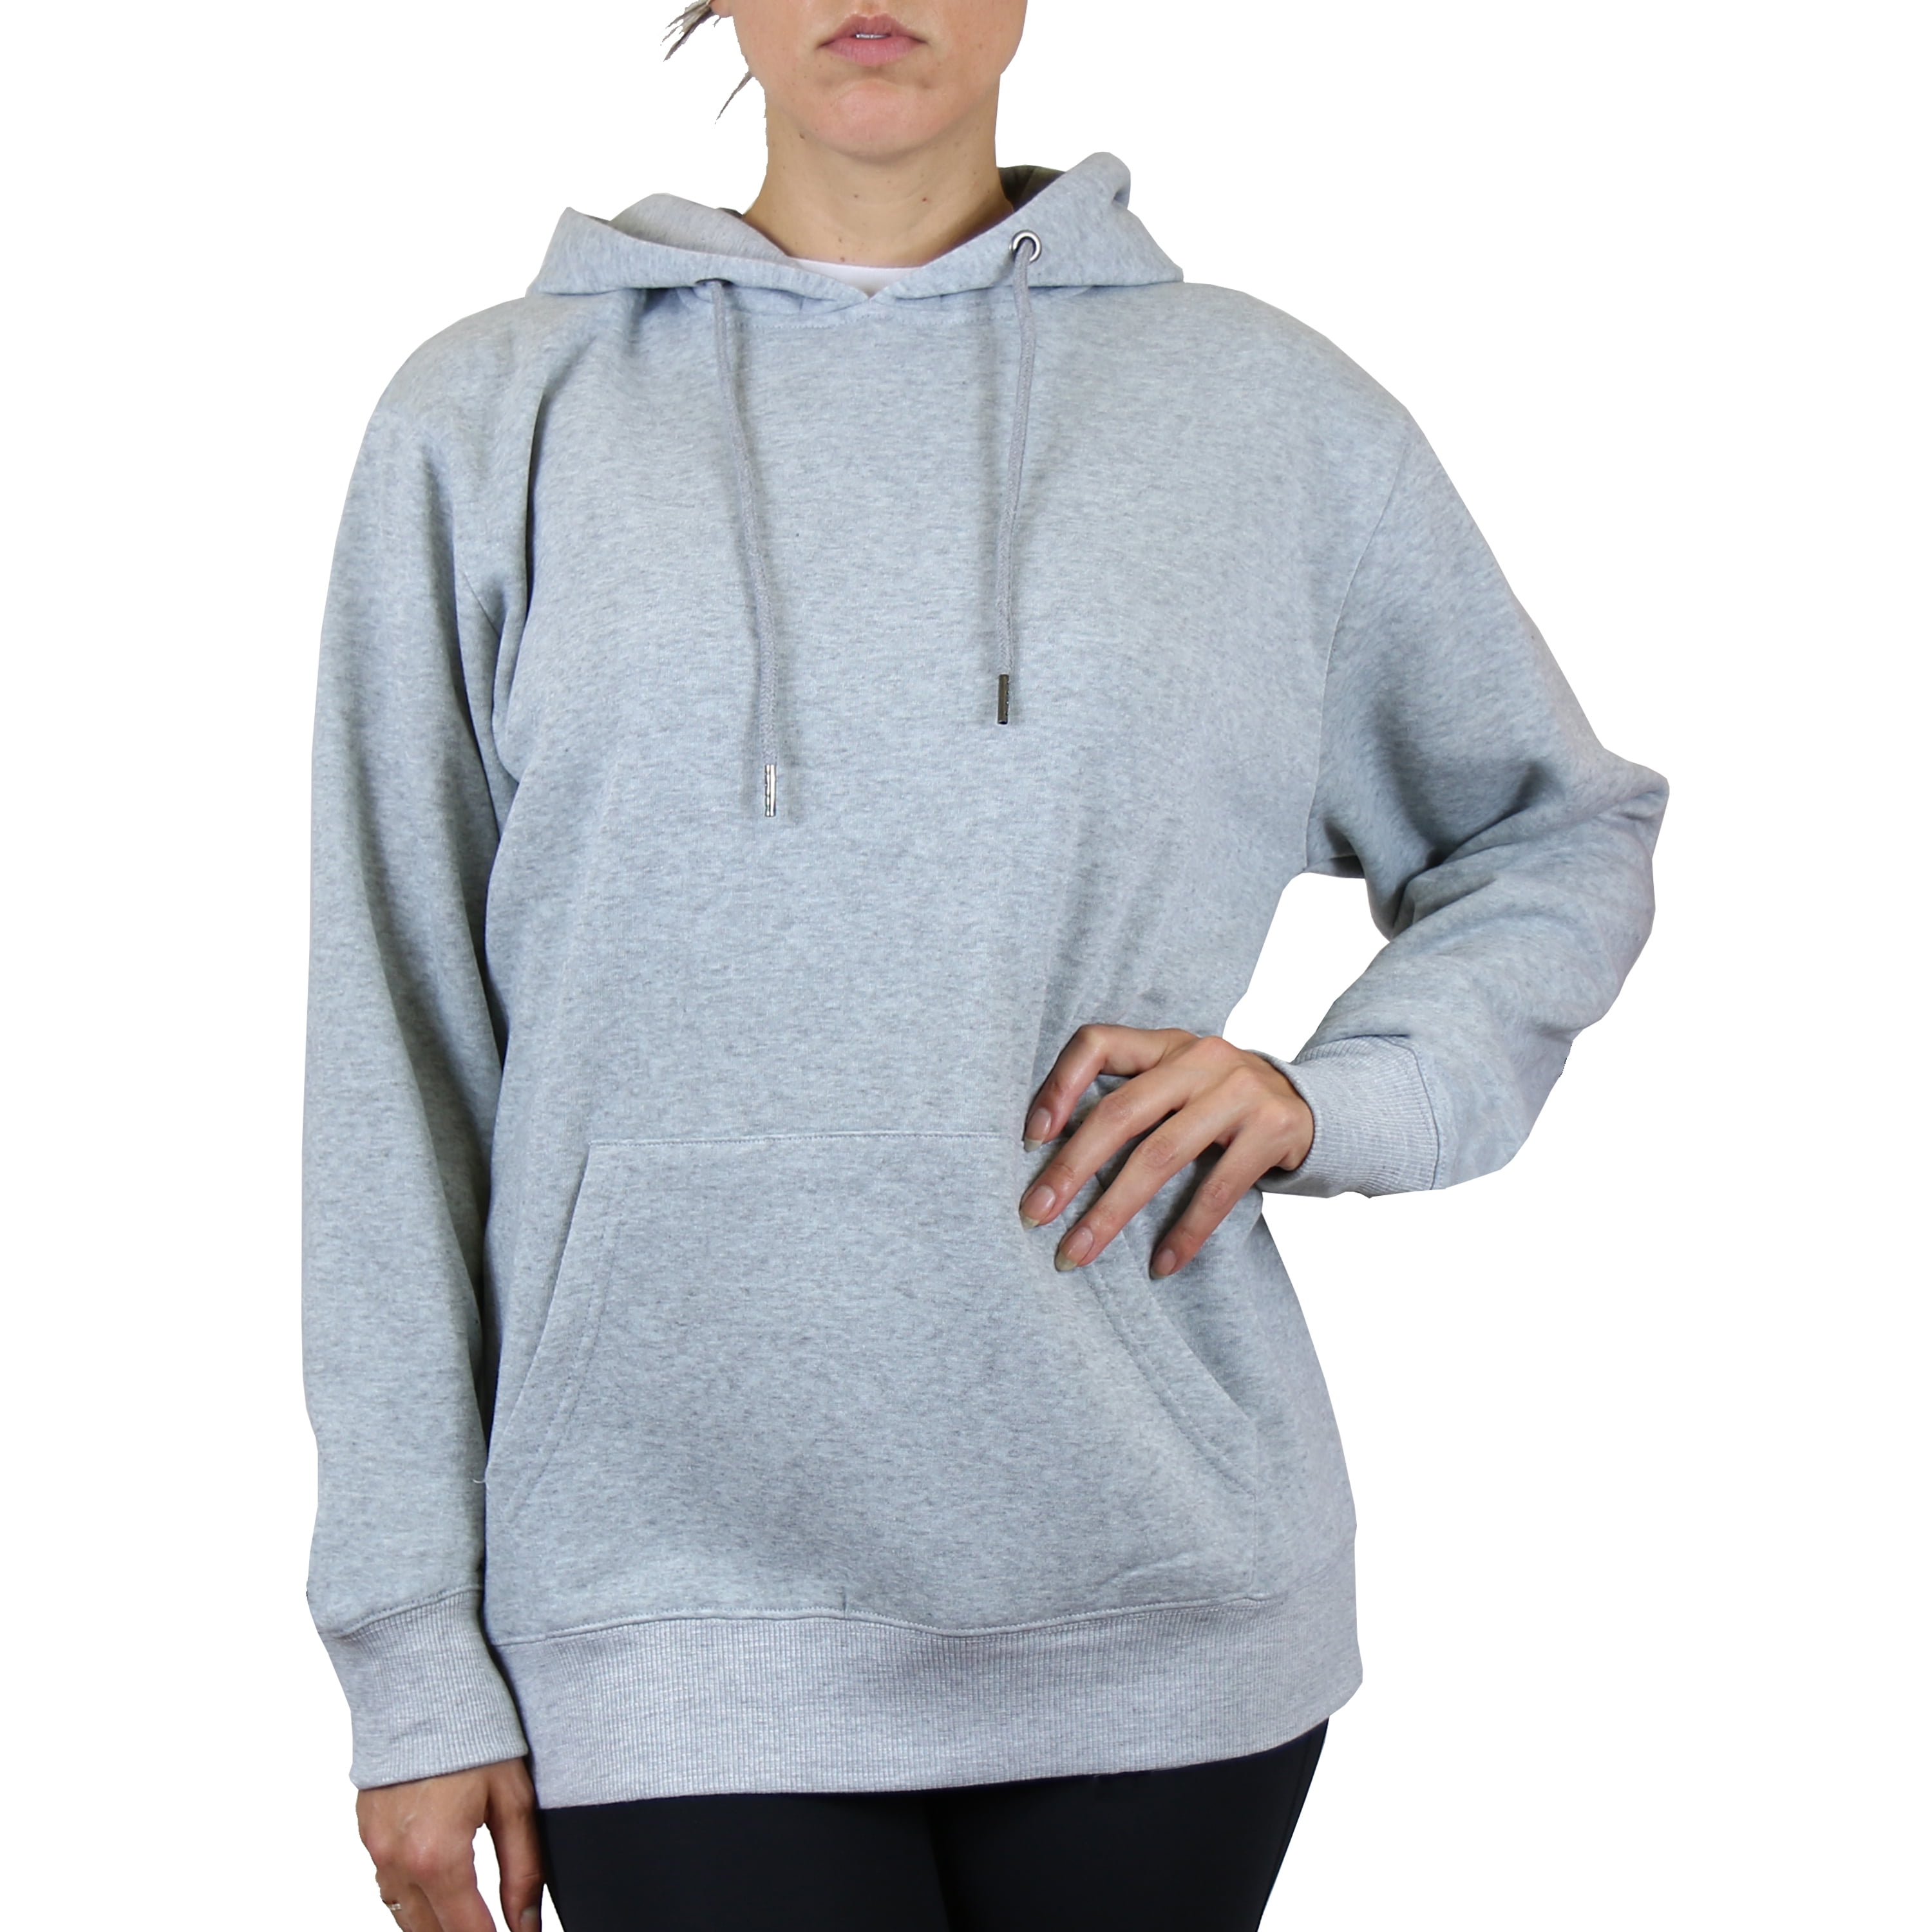 GBH Women's Loose-Fit Fleece-Lined Pullover Hoodie (S-2XL) - Walmart.com